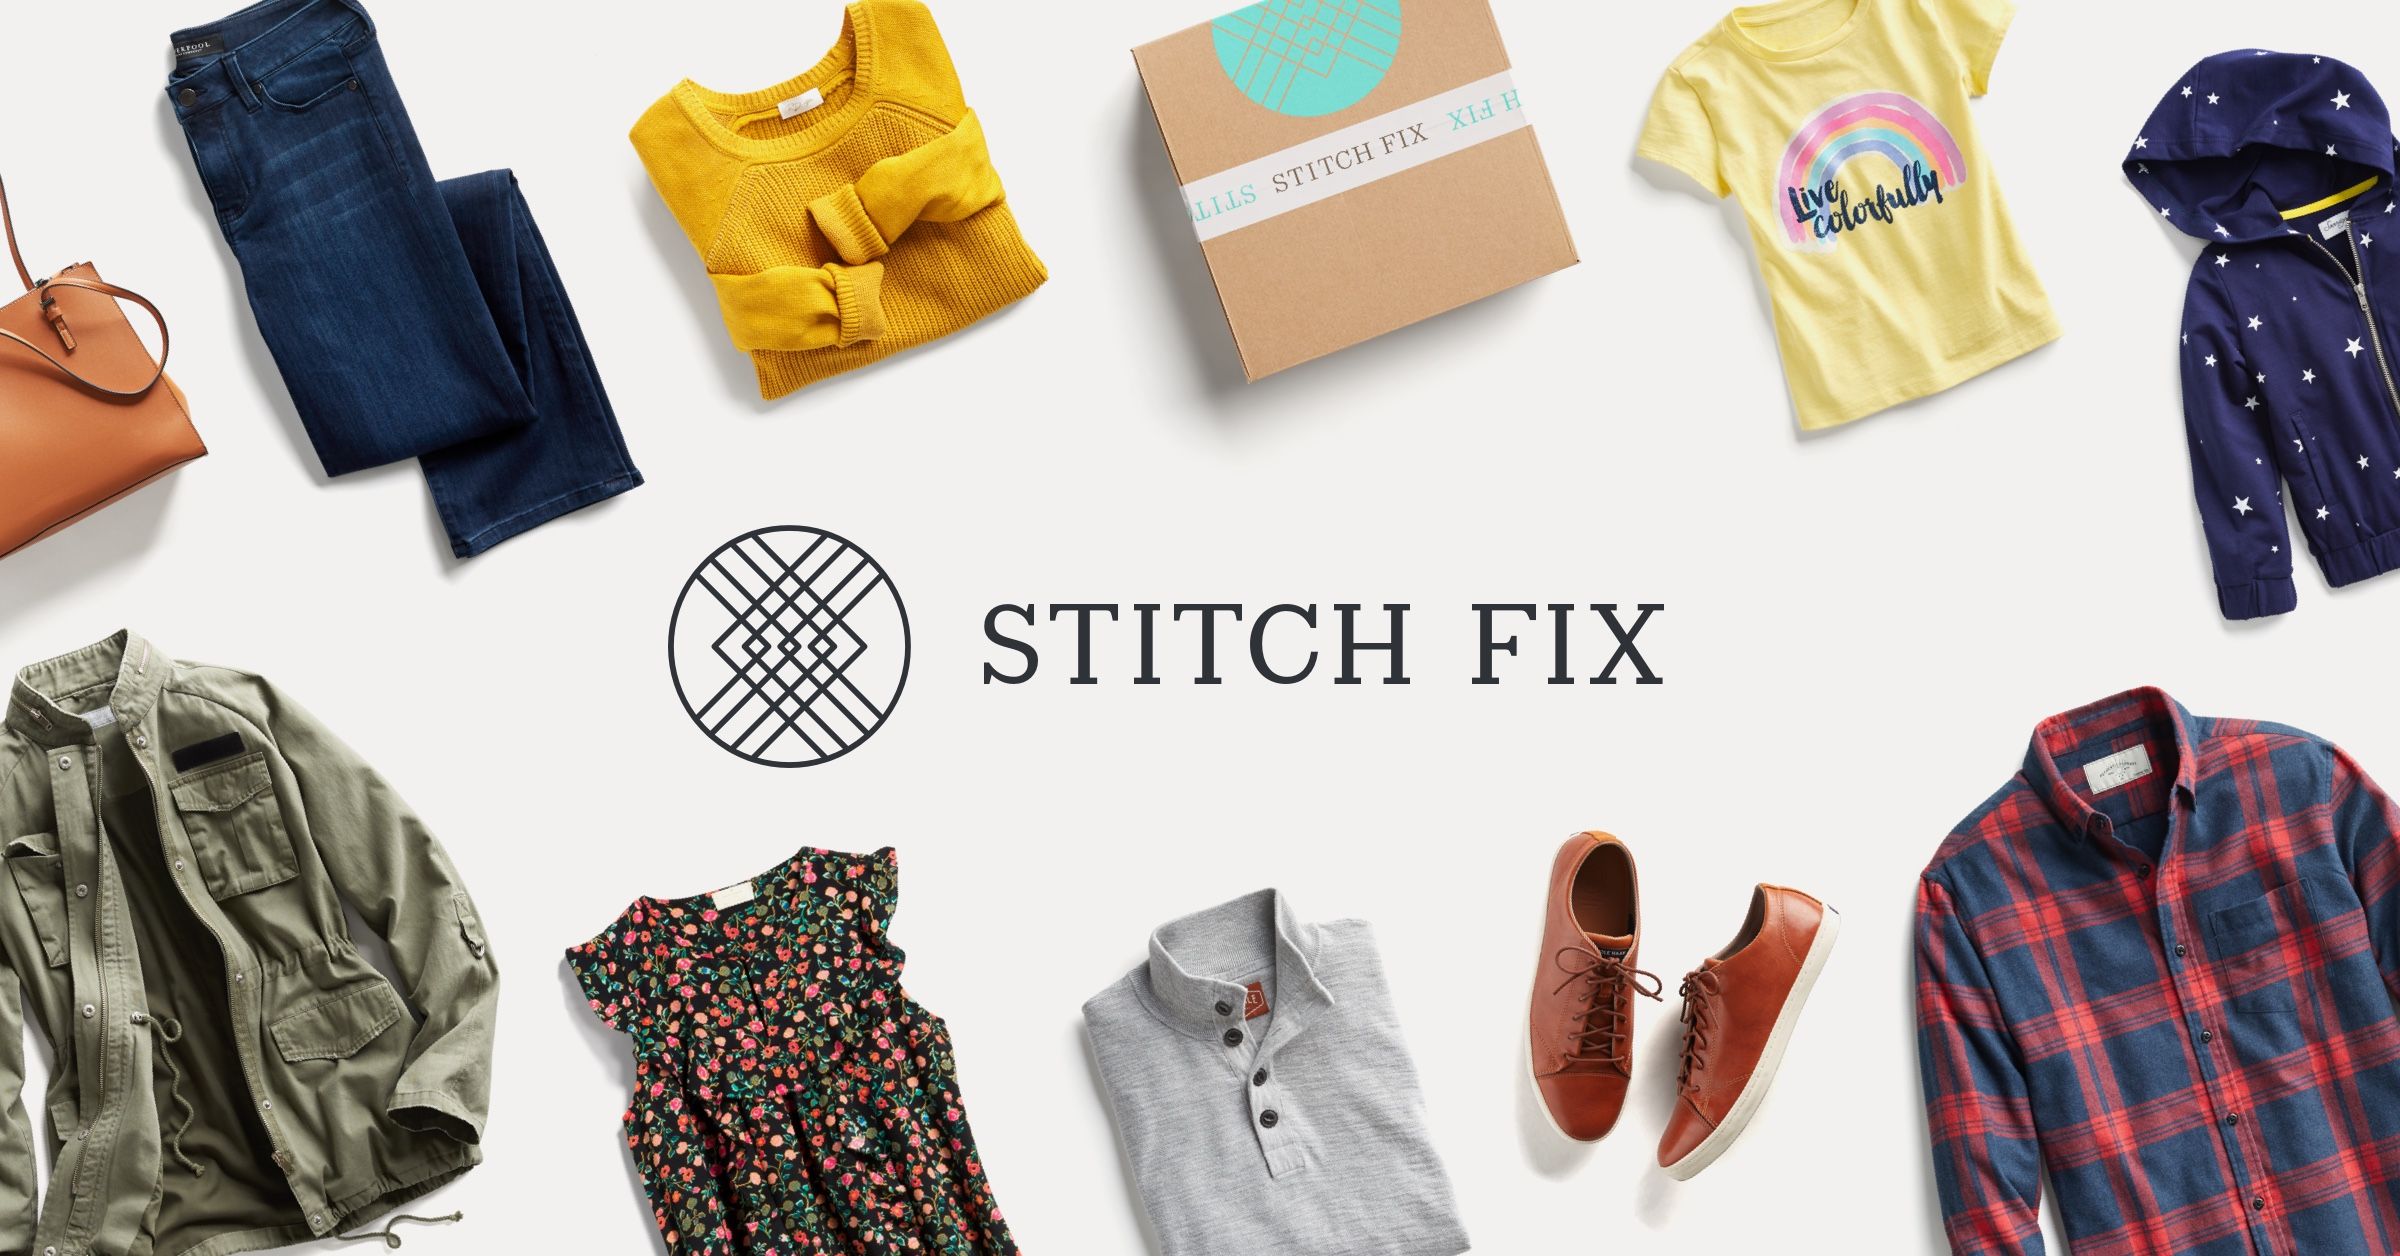 Stitch Fix and Fix are trademarks of Stitch Fix, Inc. | Stitch Fix